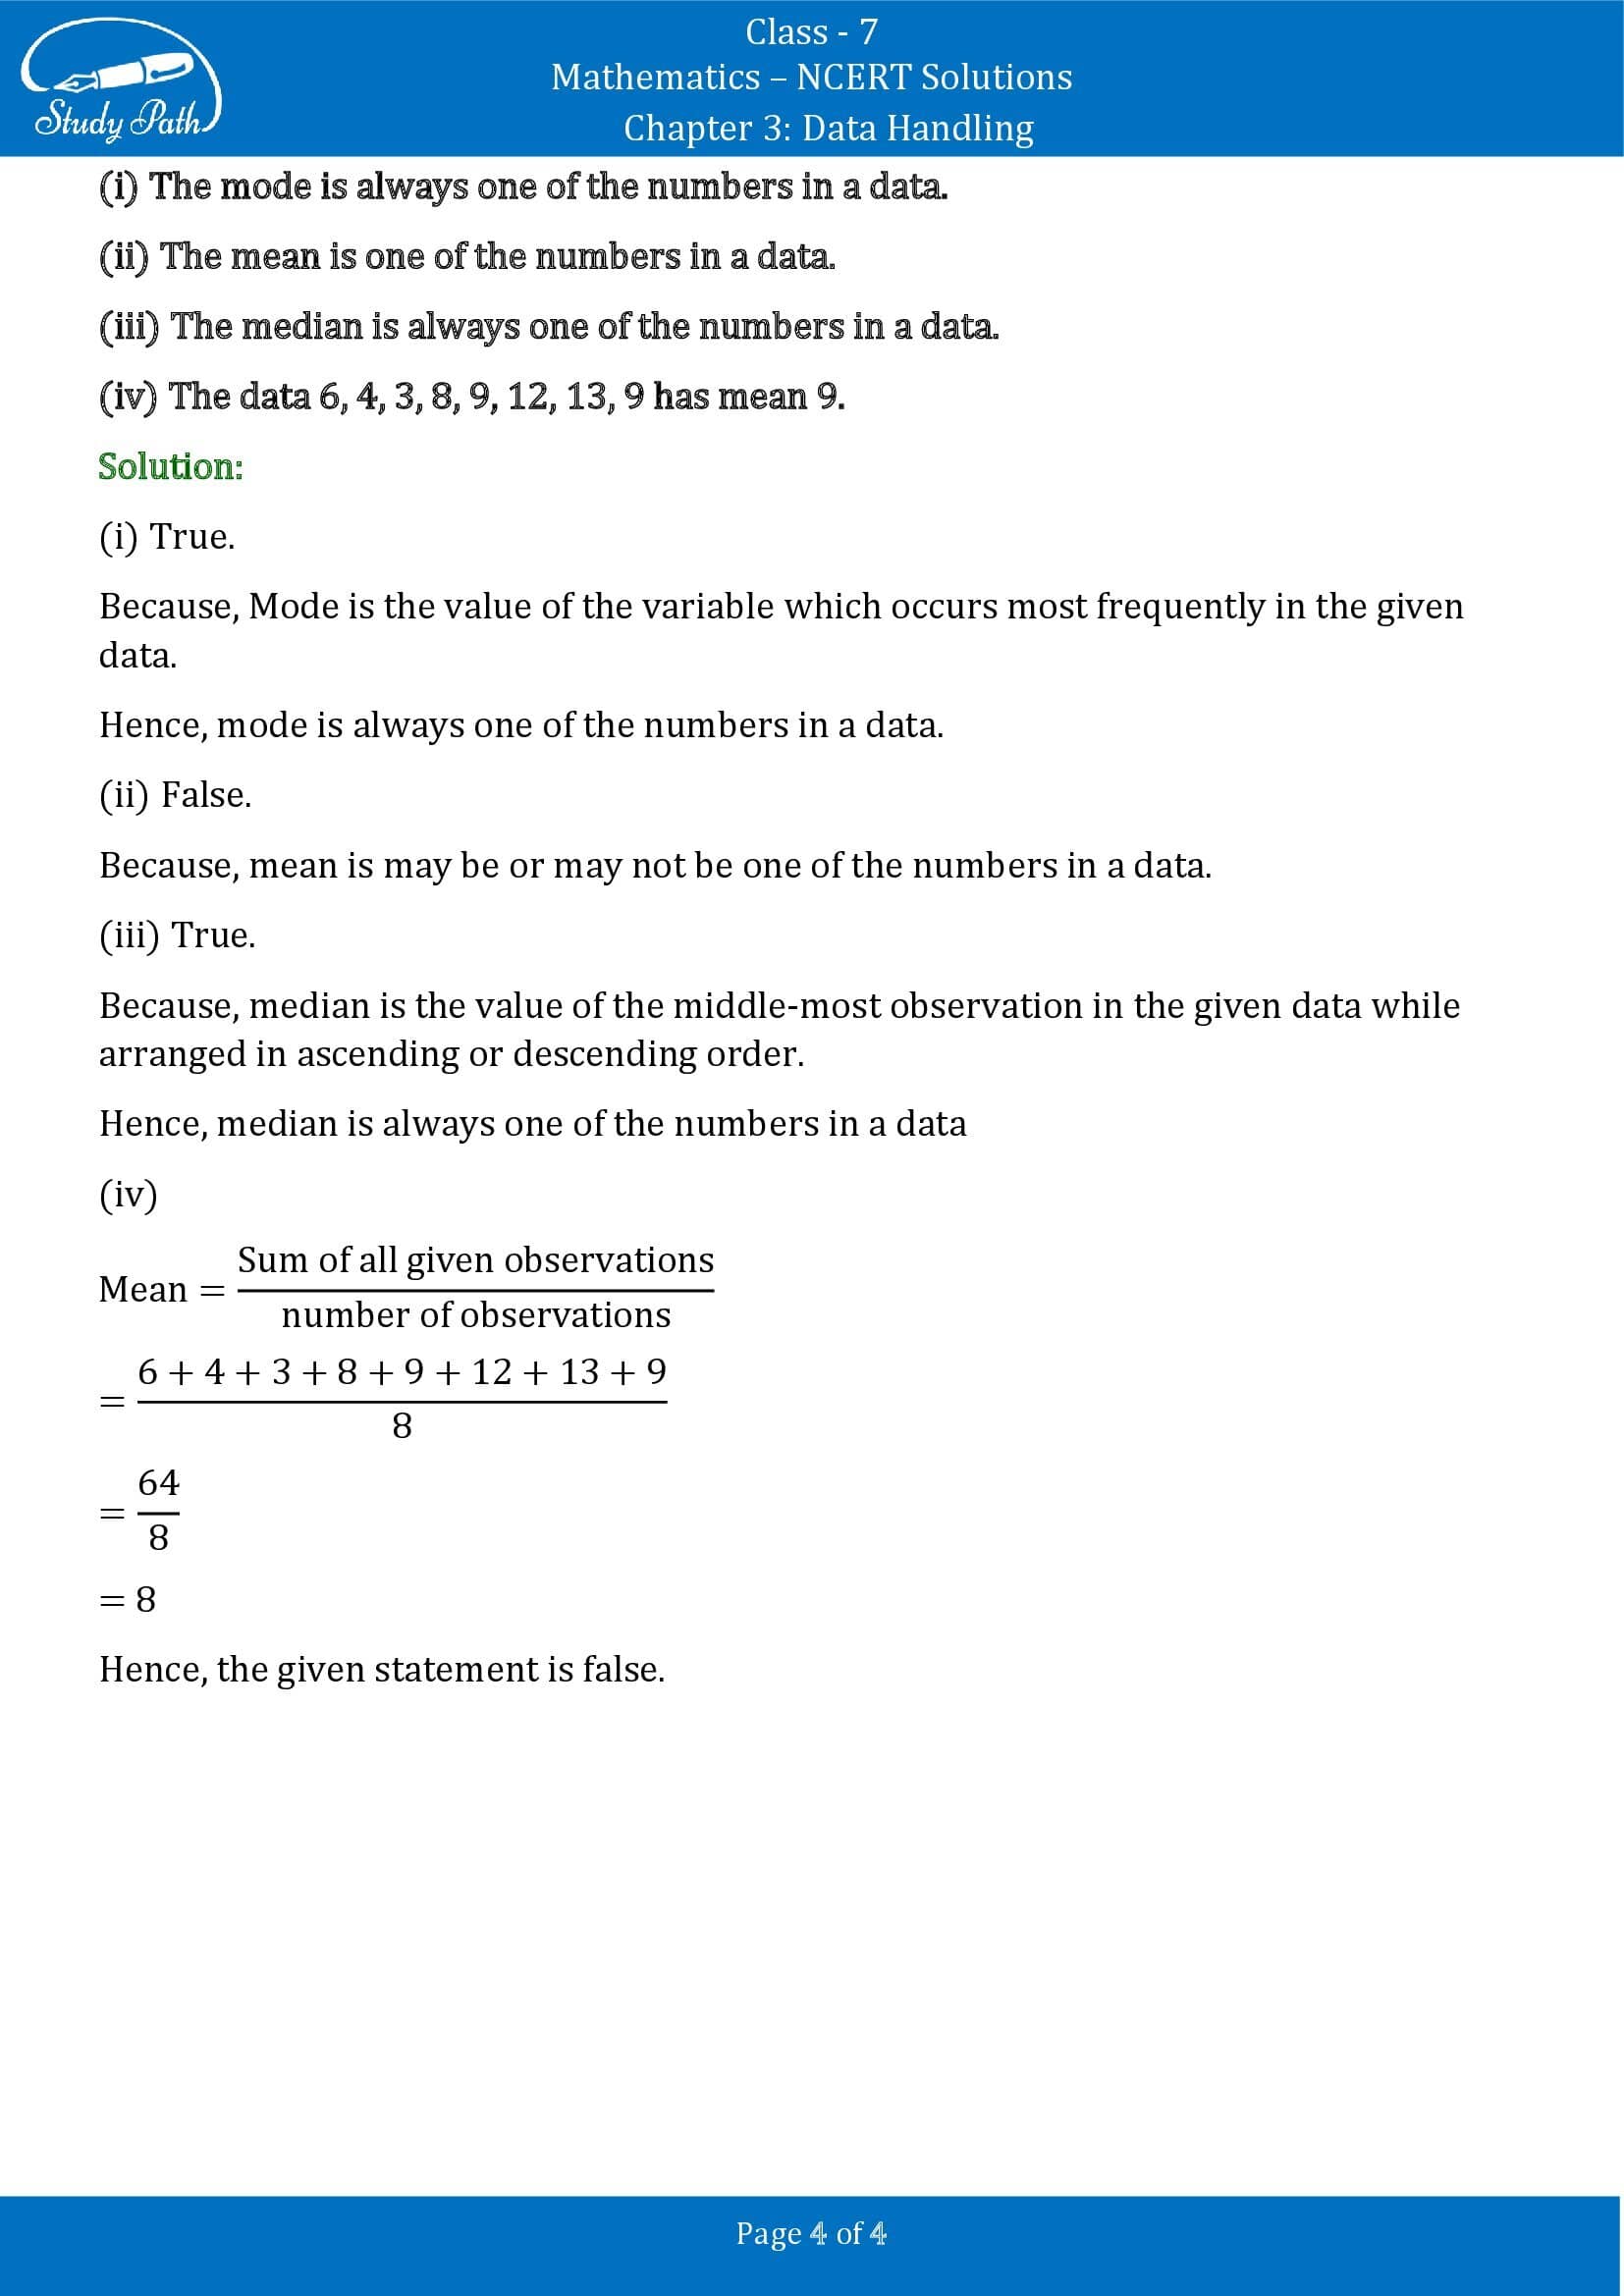 NCERT Solutions for Class 7 Maths Chapter 3 Data Handling Exercise 3.2 00004